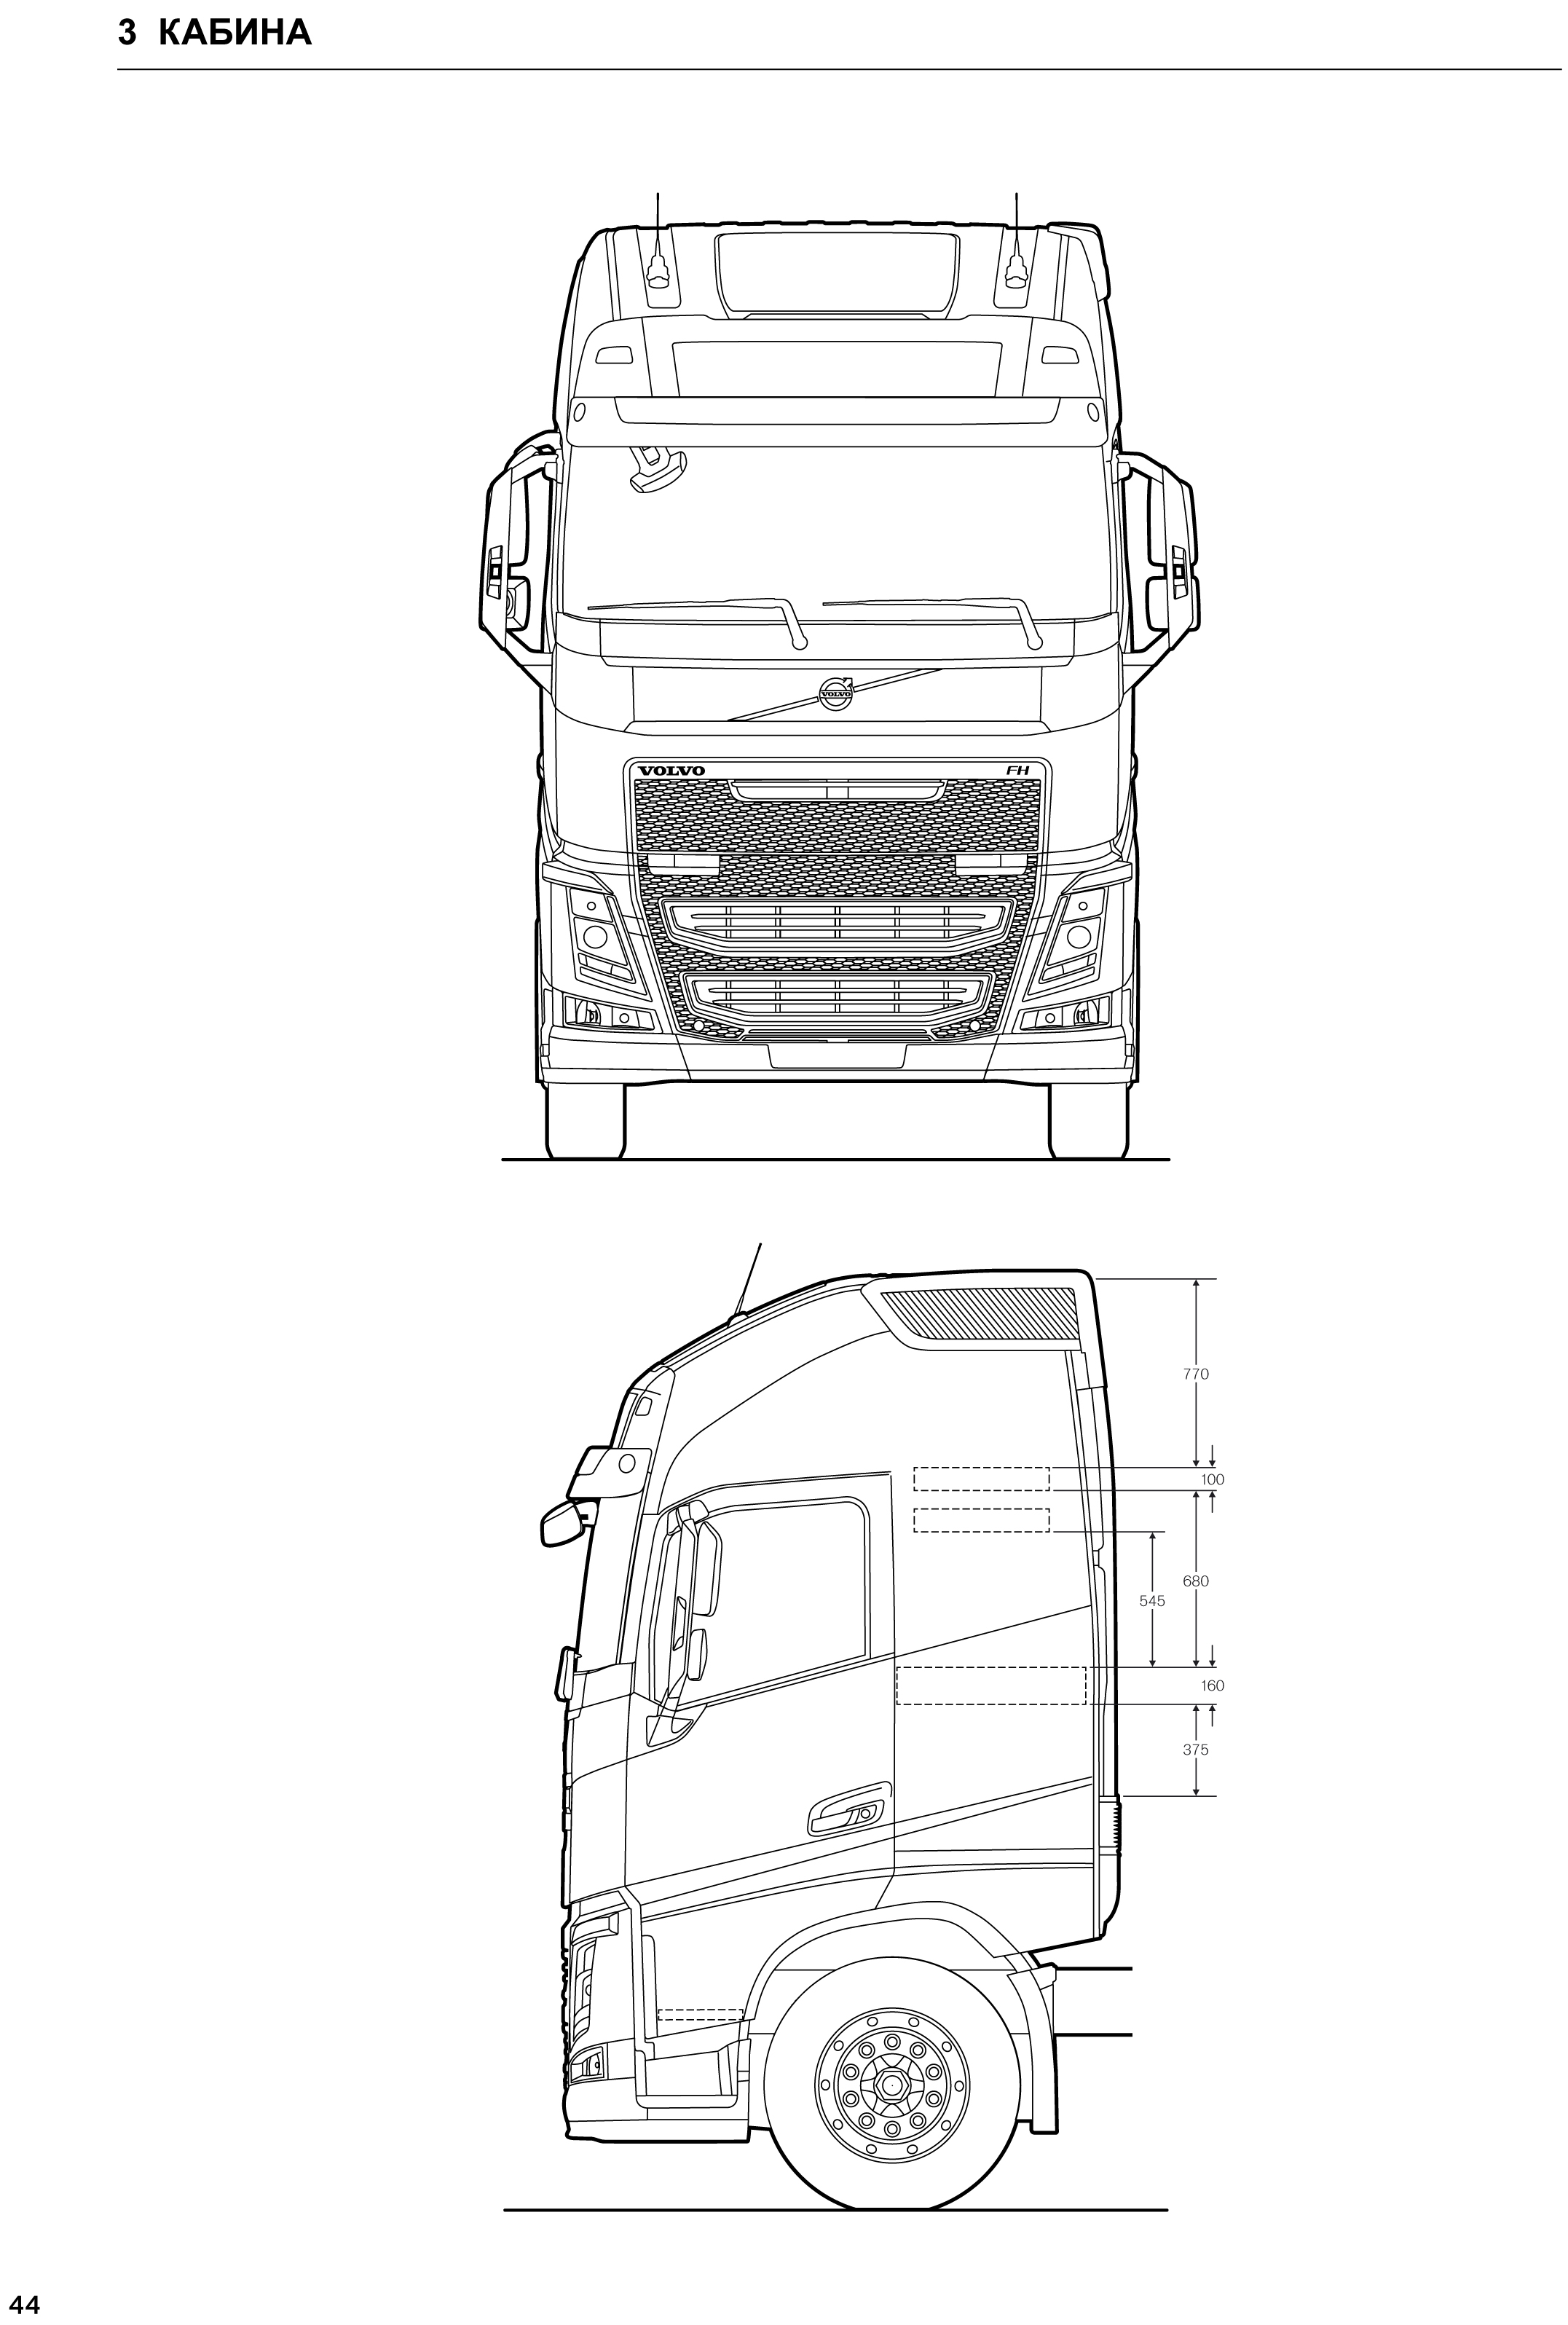 Габариты volvo fh. Вольво FH-Truck 4x2 чертеж. Volvo fh13 габариты тягача. Габариты кабины Вольво fh13. Volvo fh12 габариты на кабину.